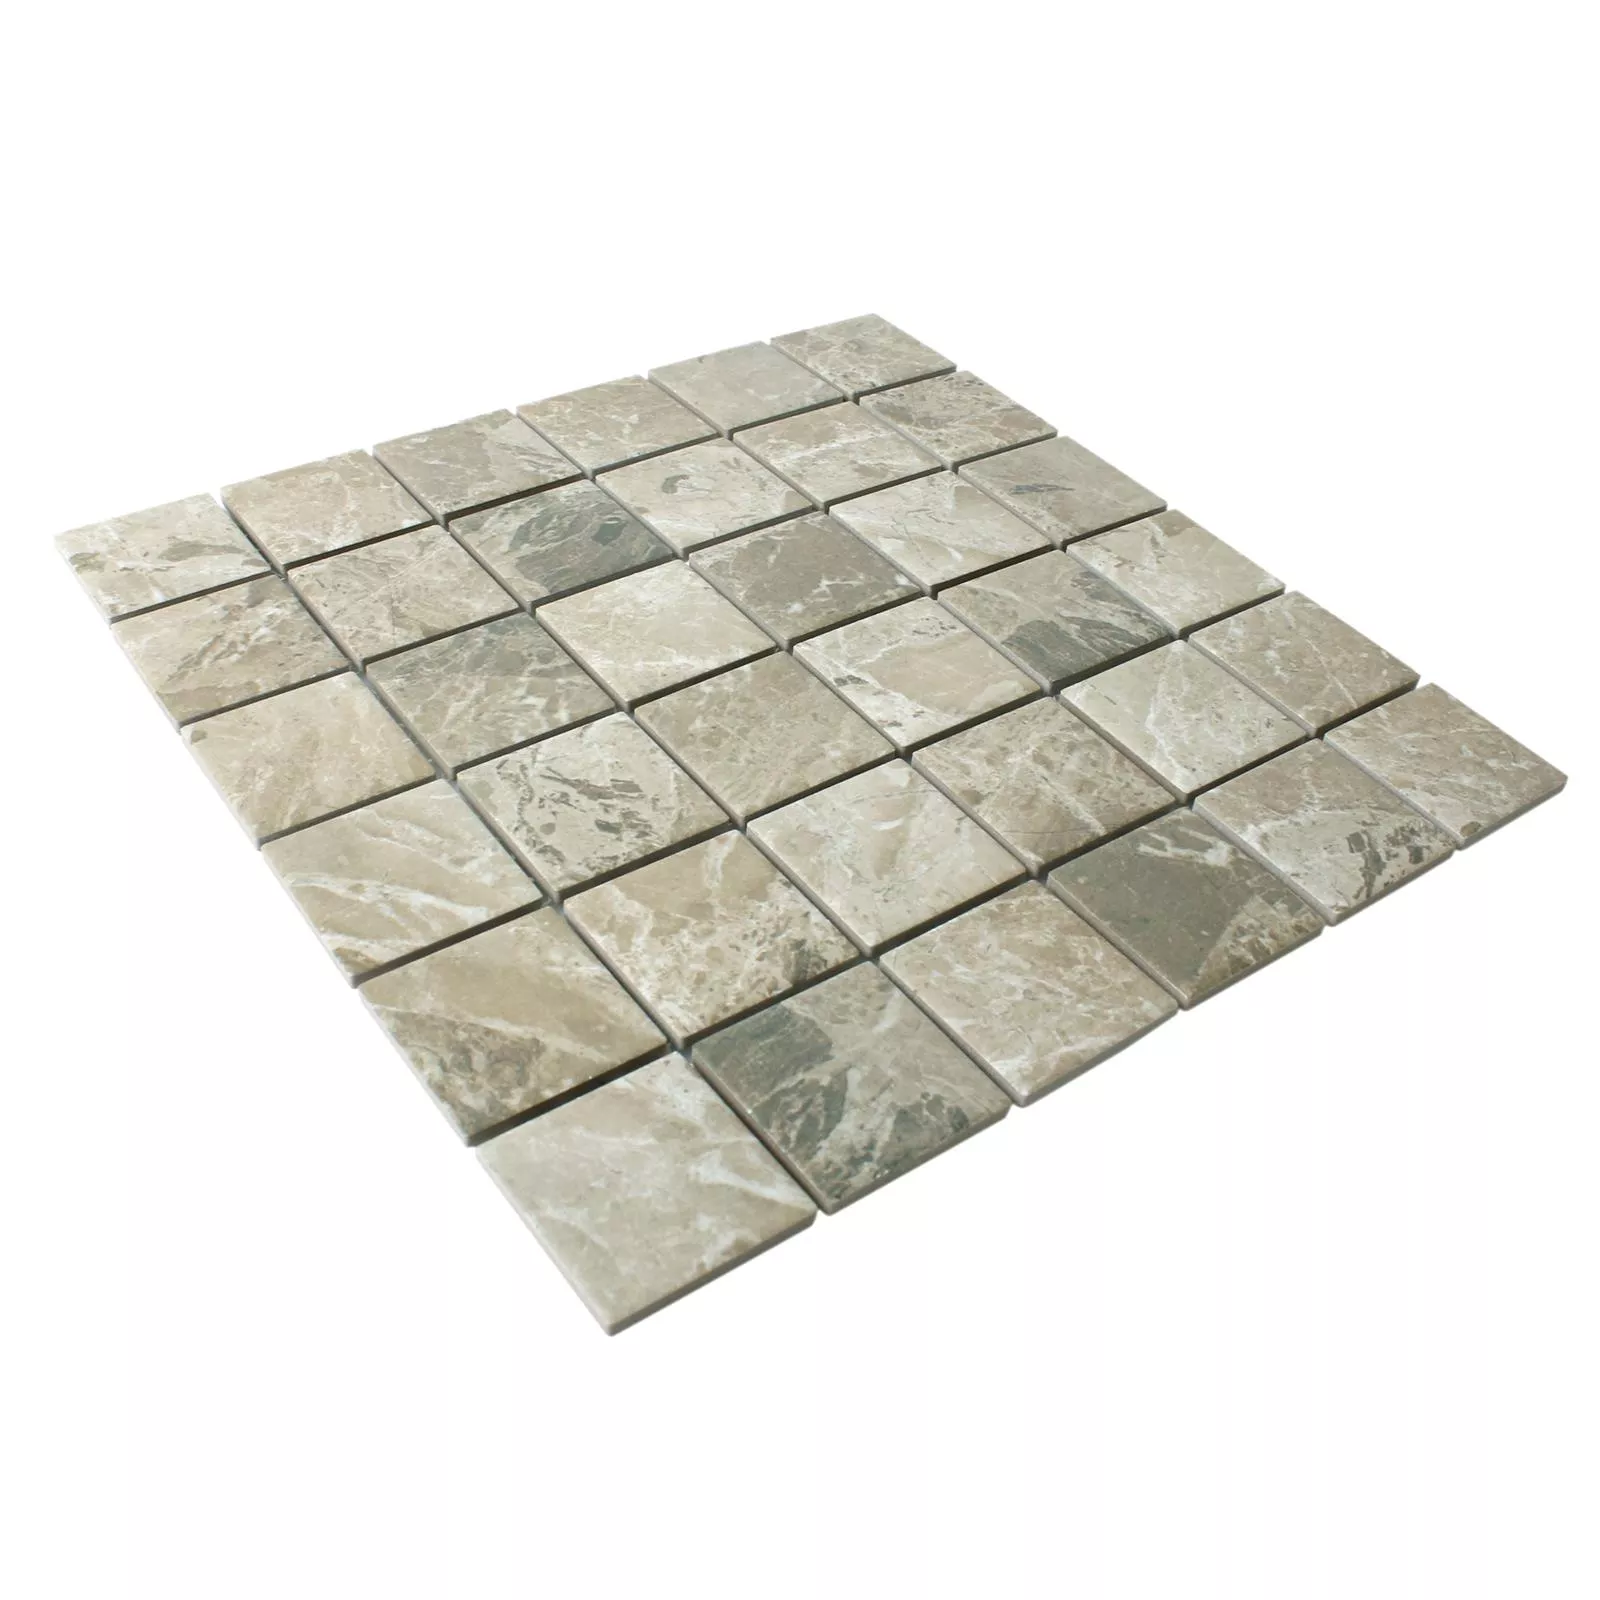 Sample Mosaic Tiles Ceramic Sahara Stone Optic Brown